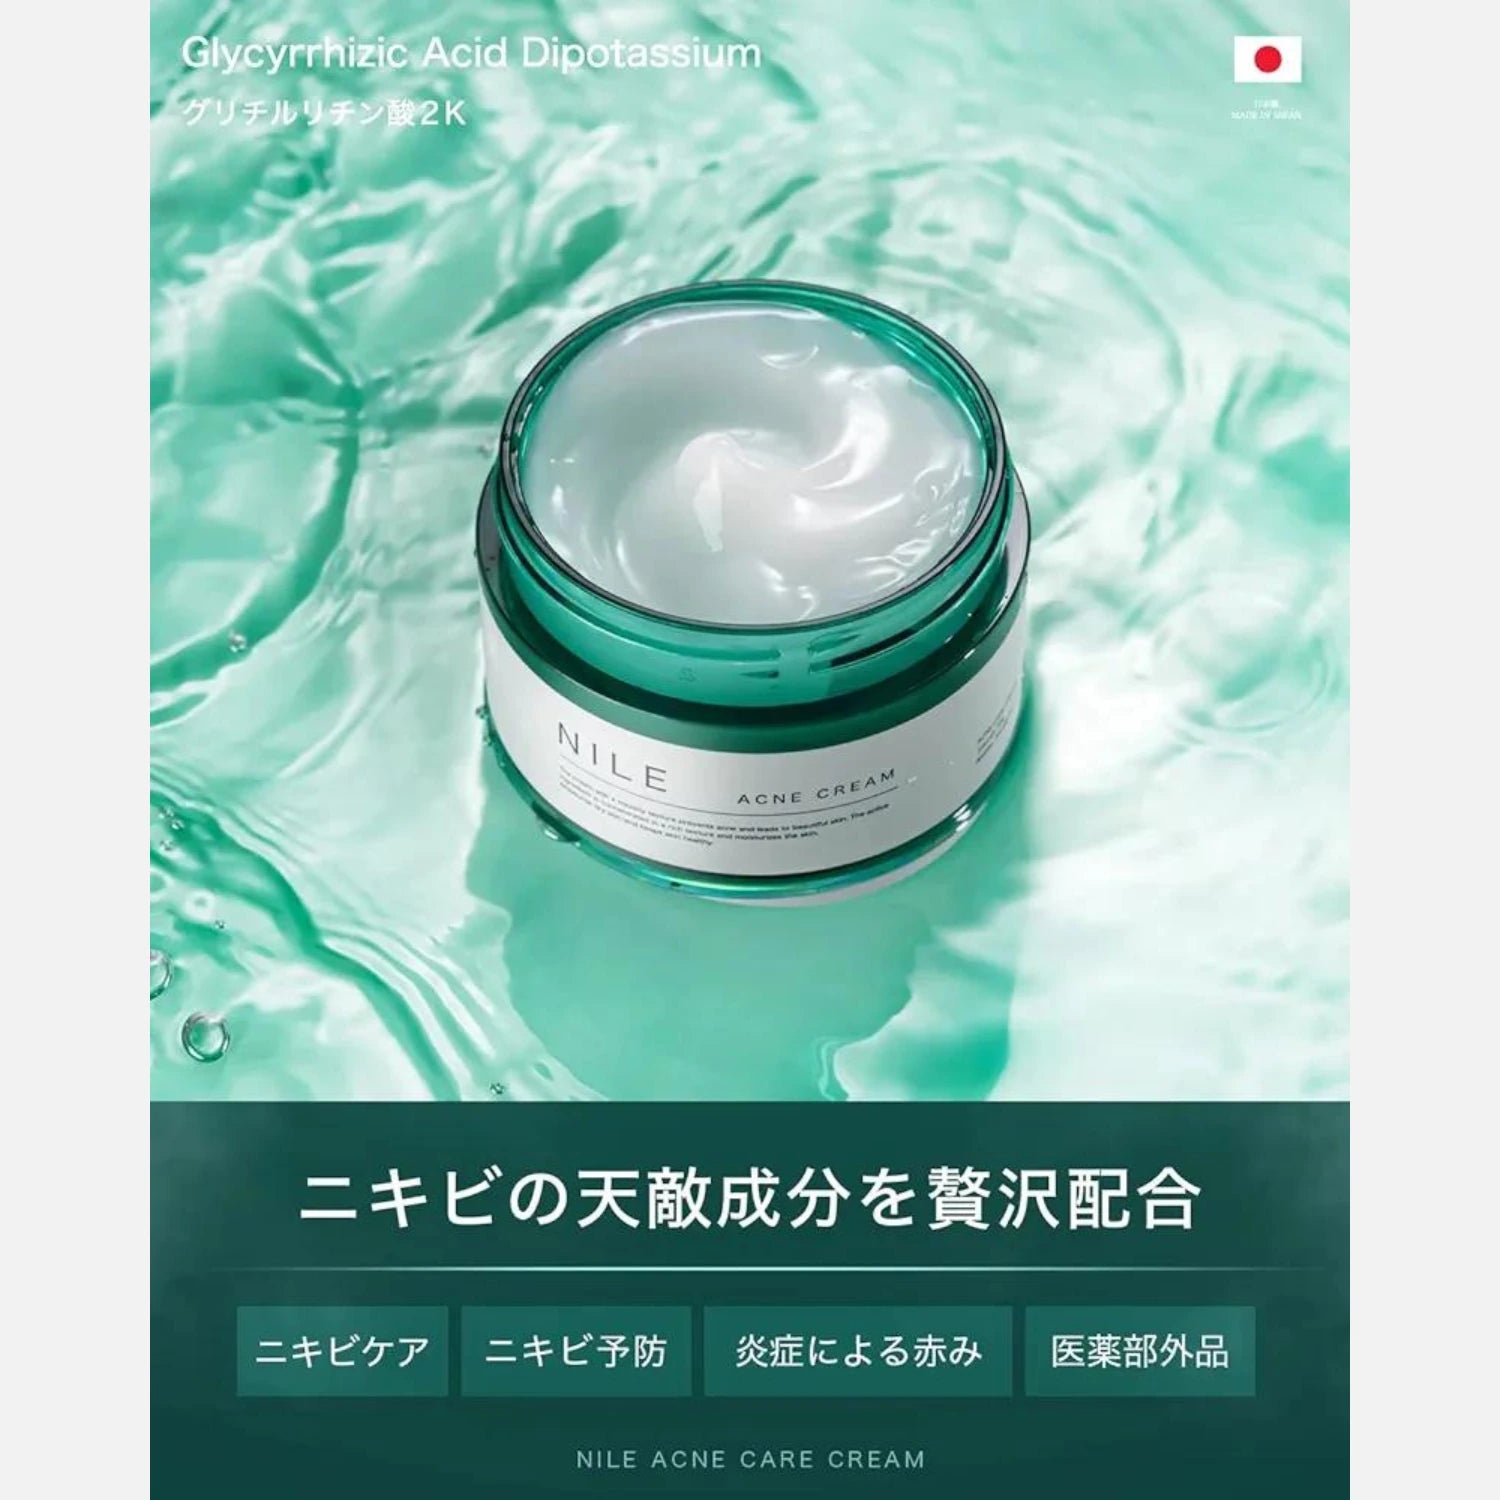 Nile Acne Care Cream 50g - Buy Me Japan